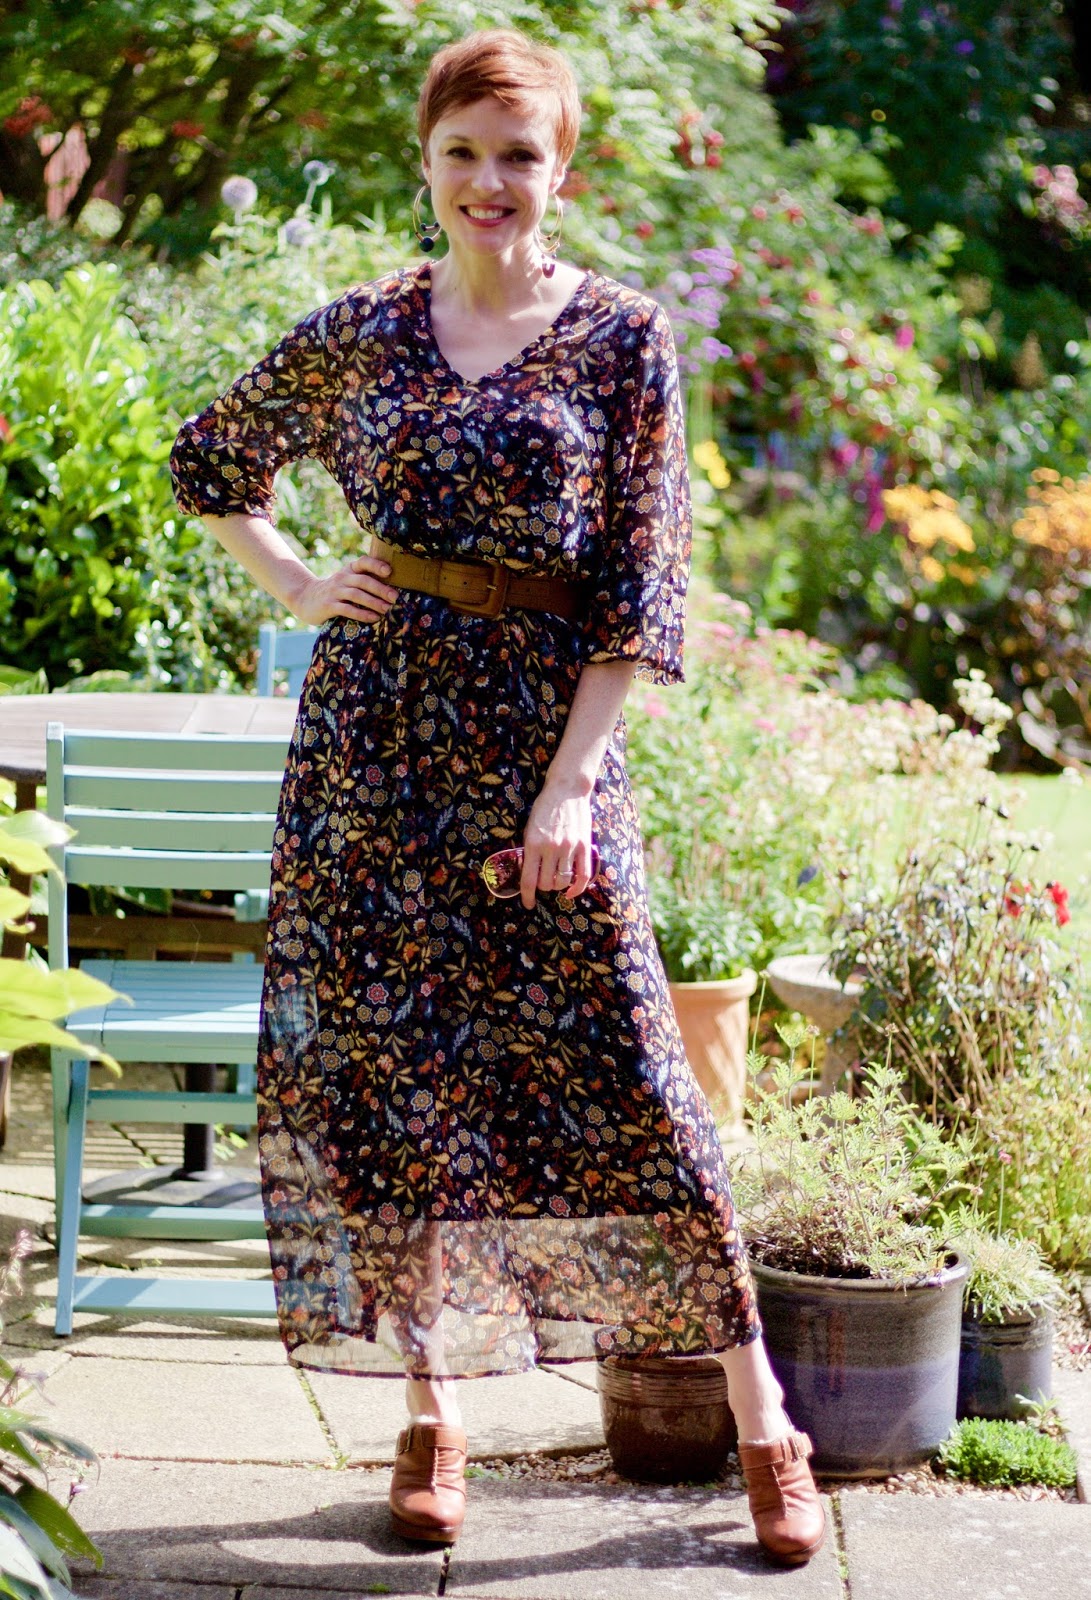 Floral Boho Dress, Tan clogs | Late Summer boho style, over 40.